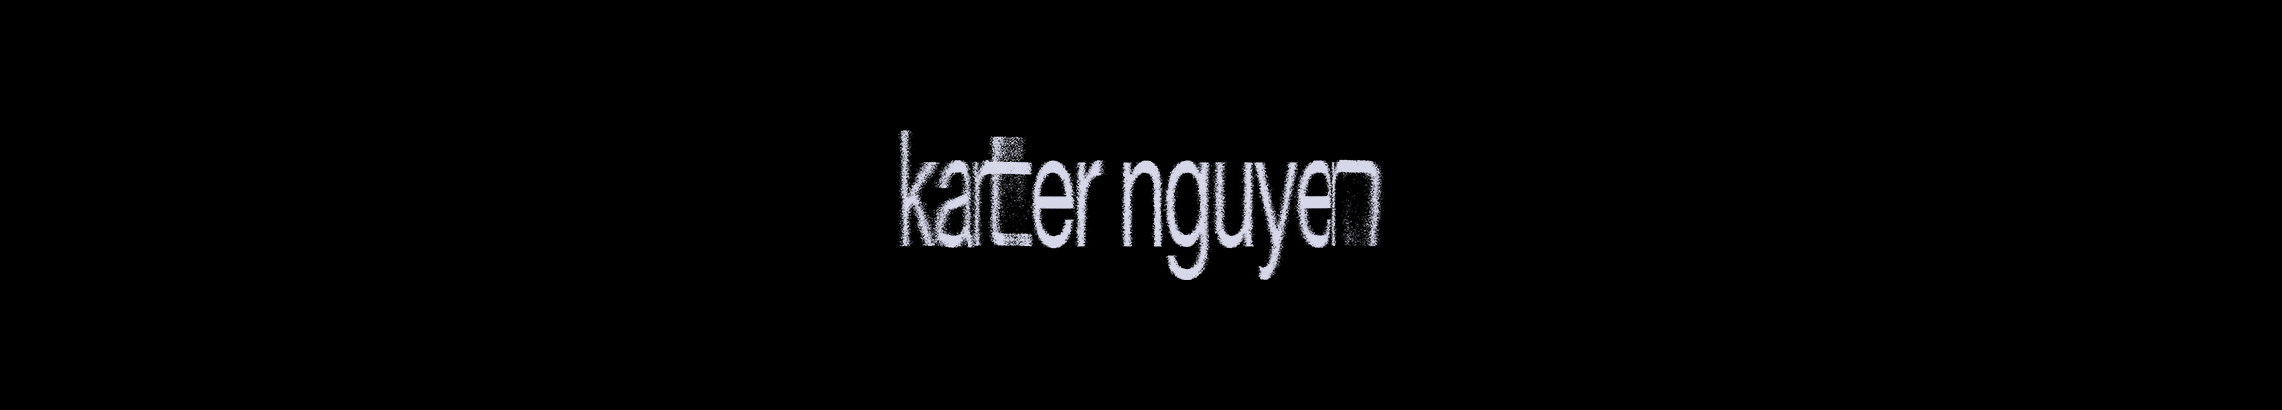 Karter Nguyen's profile banner